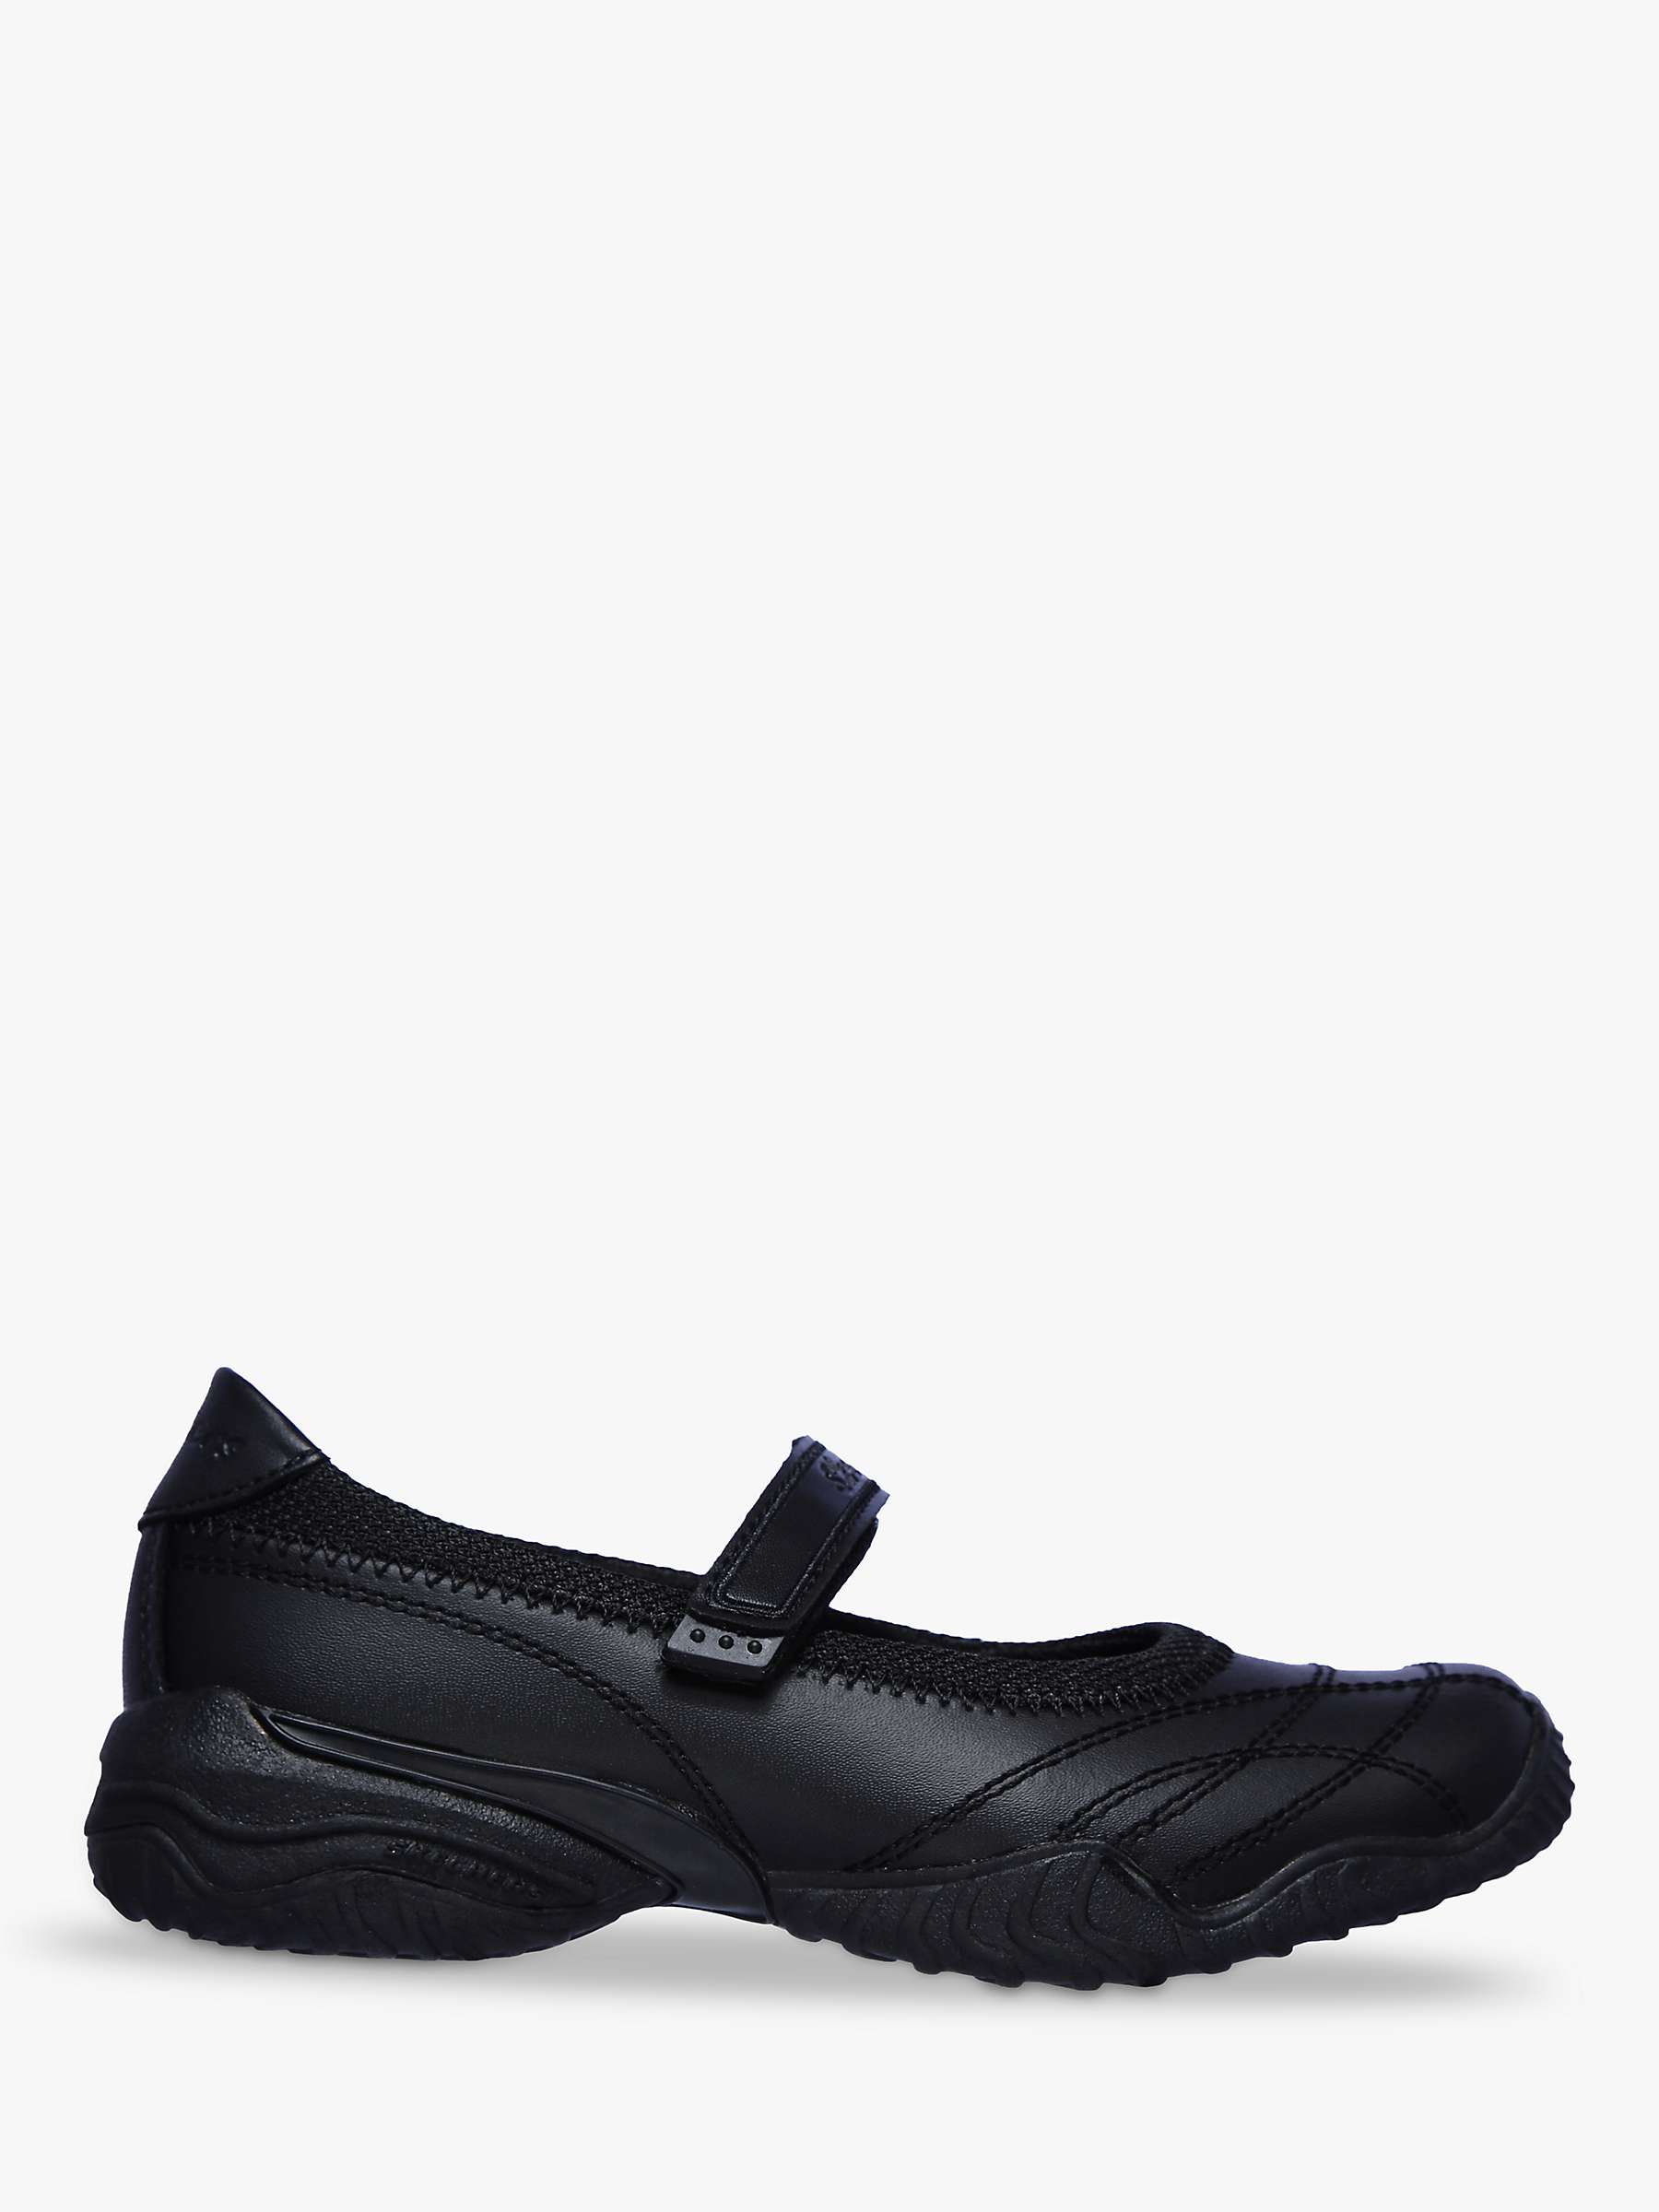 Buy Skechers Kids' Velocity Pouty School Shoes, Black Online at johnlewis.com